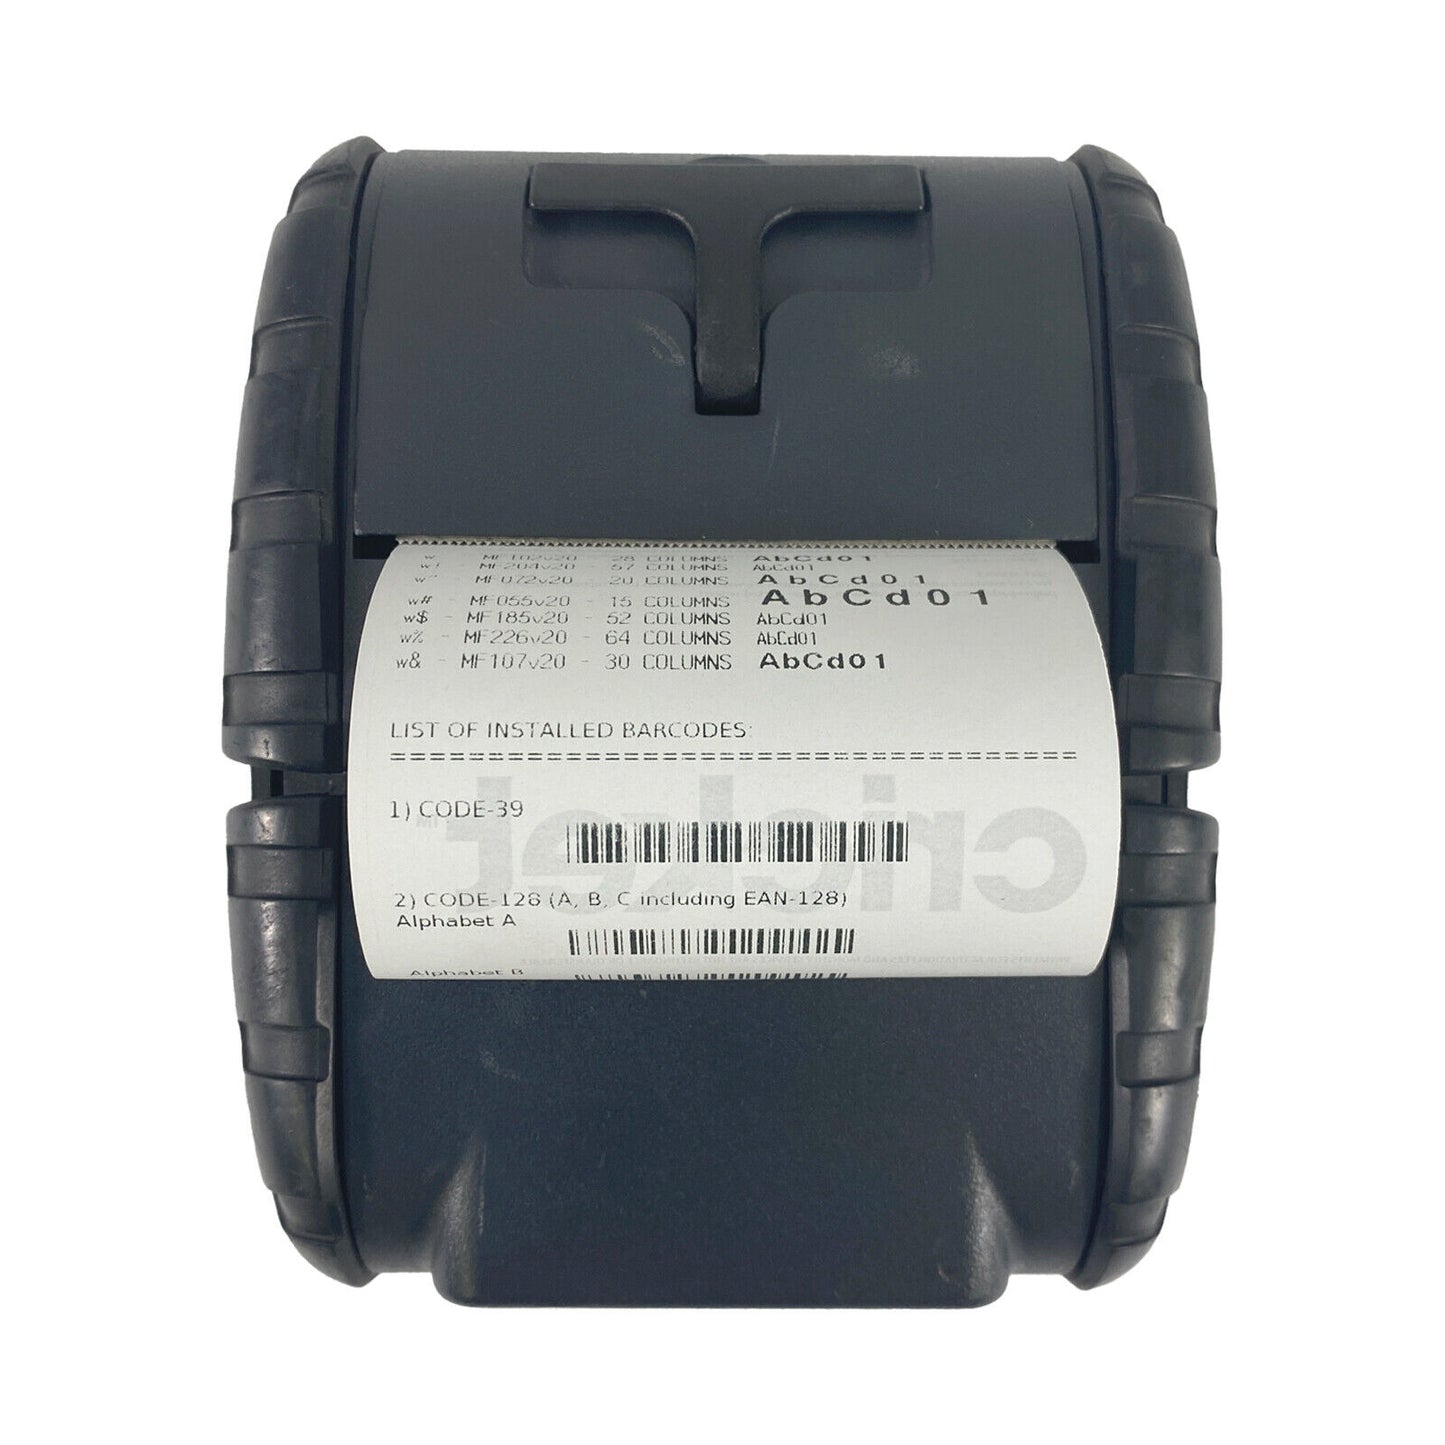 Datamax-O'Neil Apex 3 Portable Barcode Printer Bluetooth NO Charger No Battery